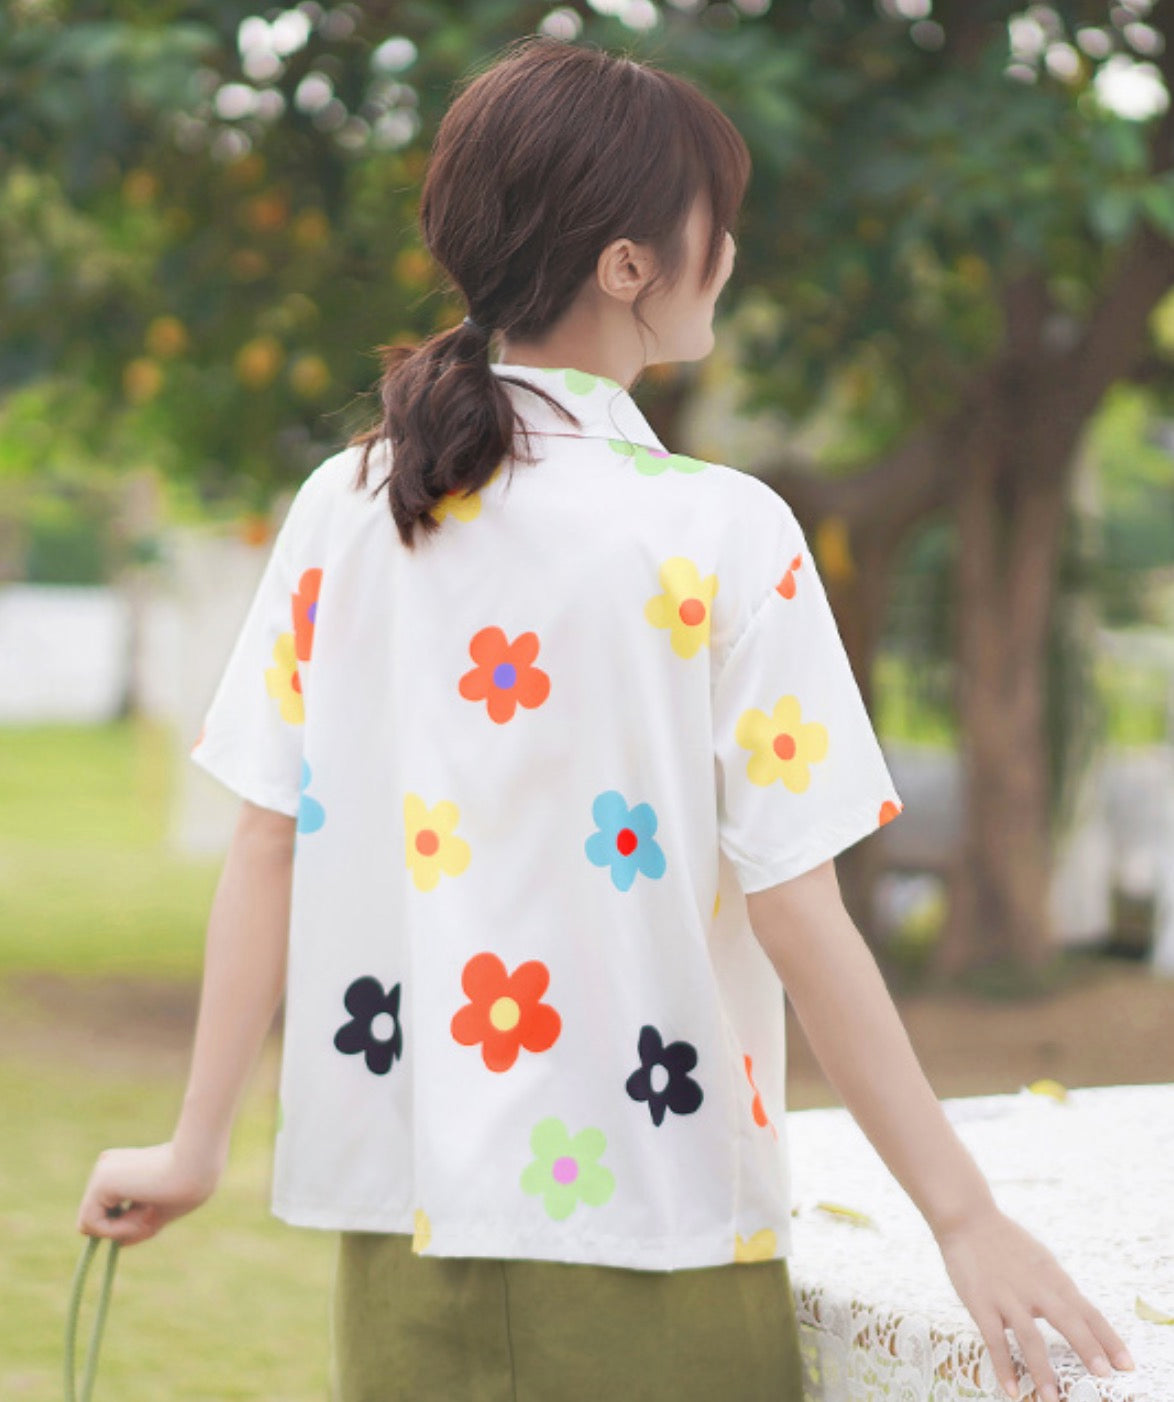 Quirky Flower Designed Shirt